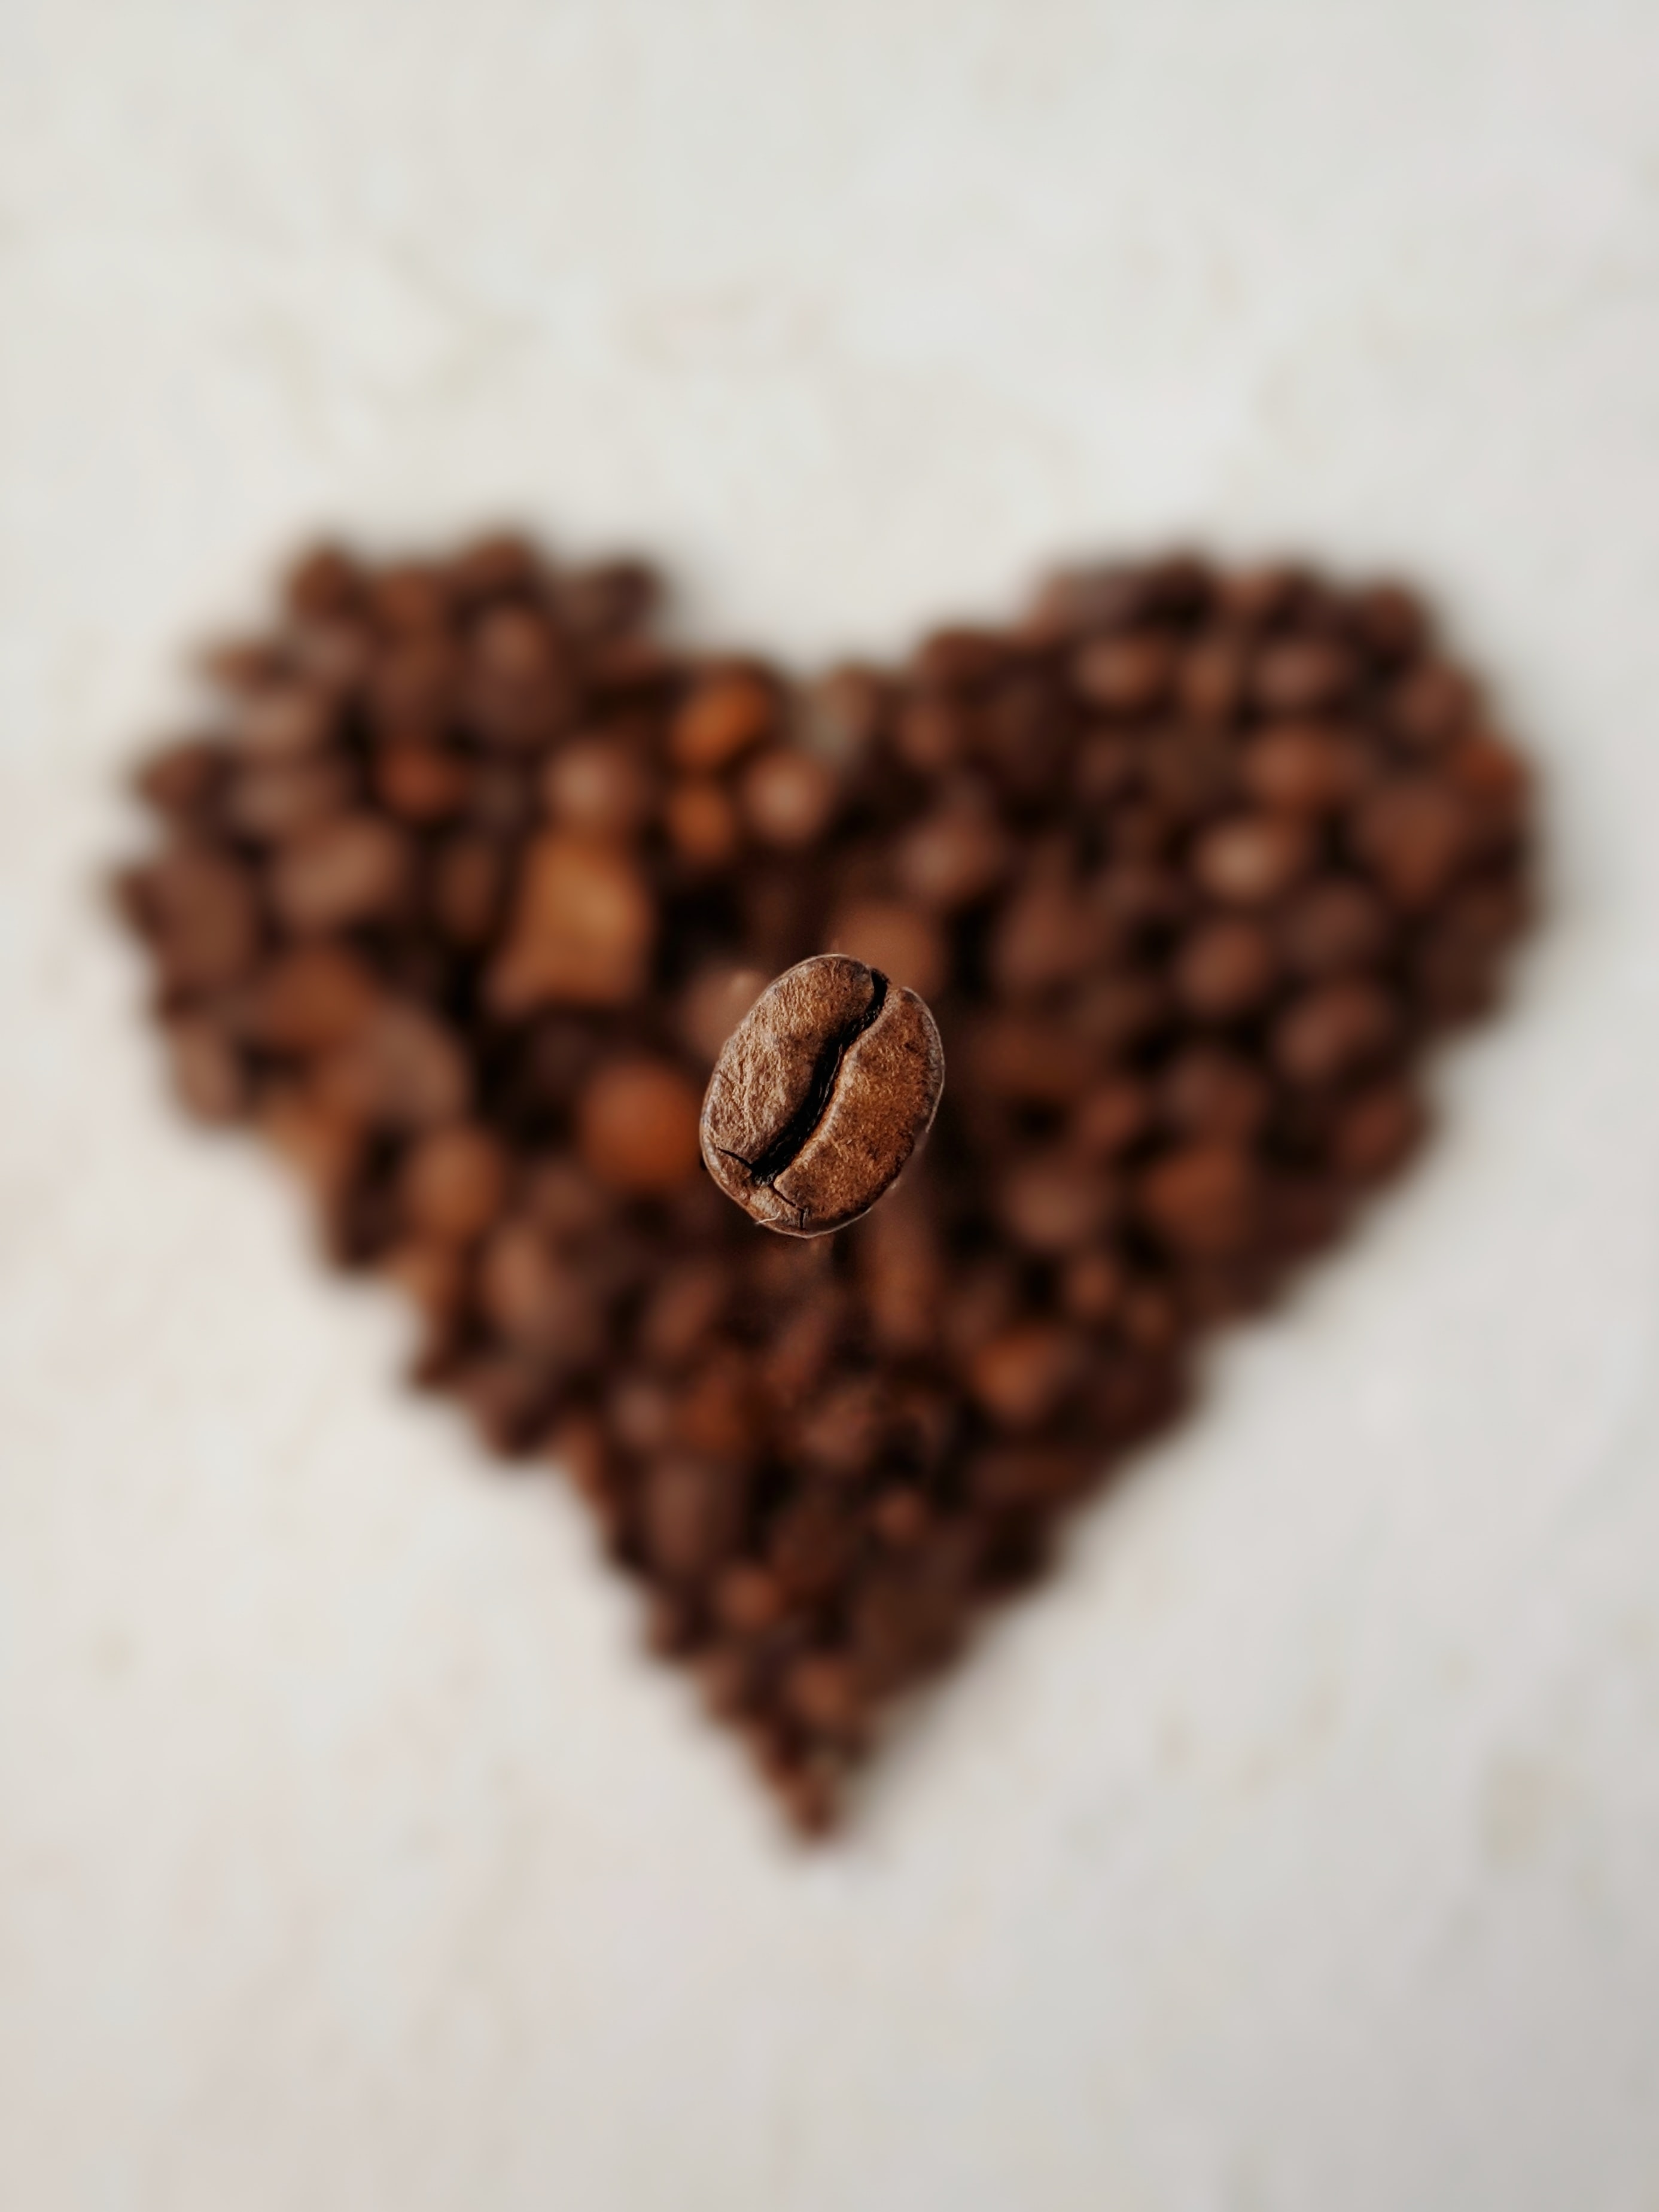 coffee grain, food, macro, heart, coffee bean images